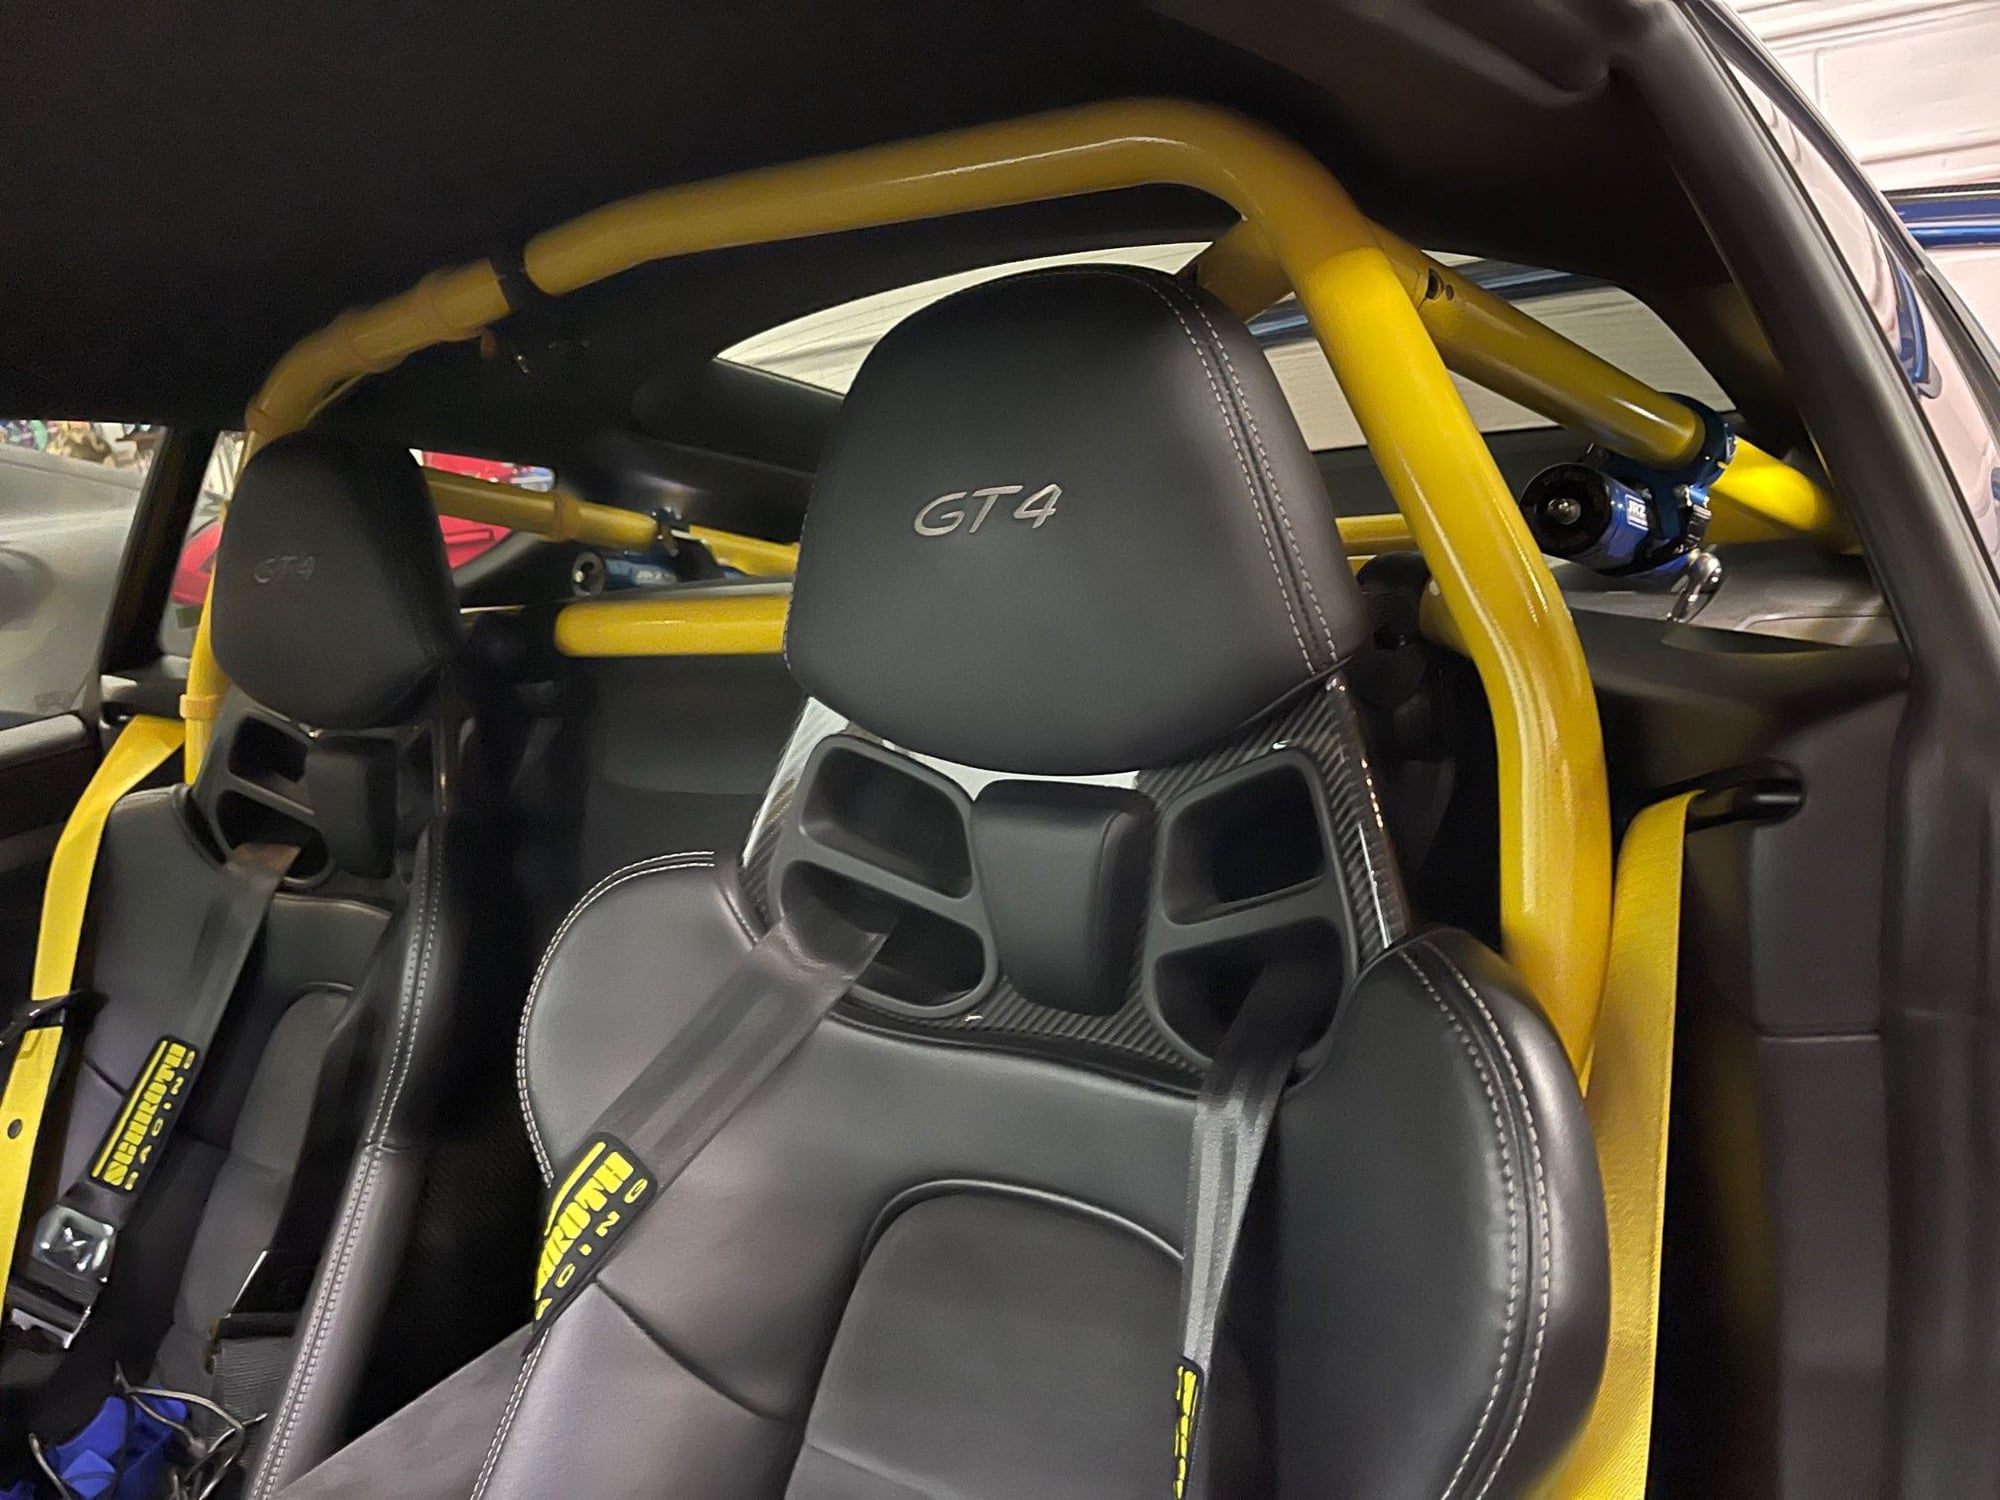 2016 Porsche Cayman GT4 - 2016 GT4 - BGB 4.0 - Guards Shorter gear/Guards LSD - JRZ - Umbrella lift kit - Used - VIN WP0AC2A88GK192097 - 13,000 Miles - 6 cyl - 2WD - Manual - Coupe - Blue - Denver, CO 80221, United States